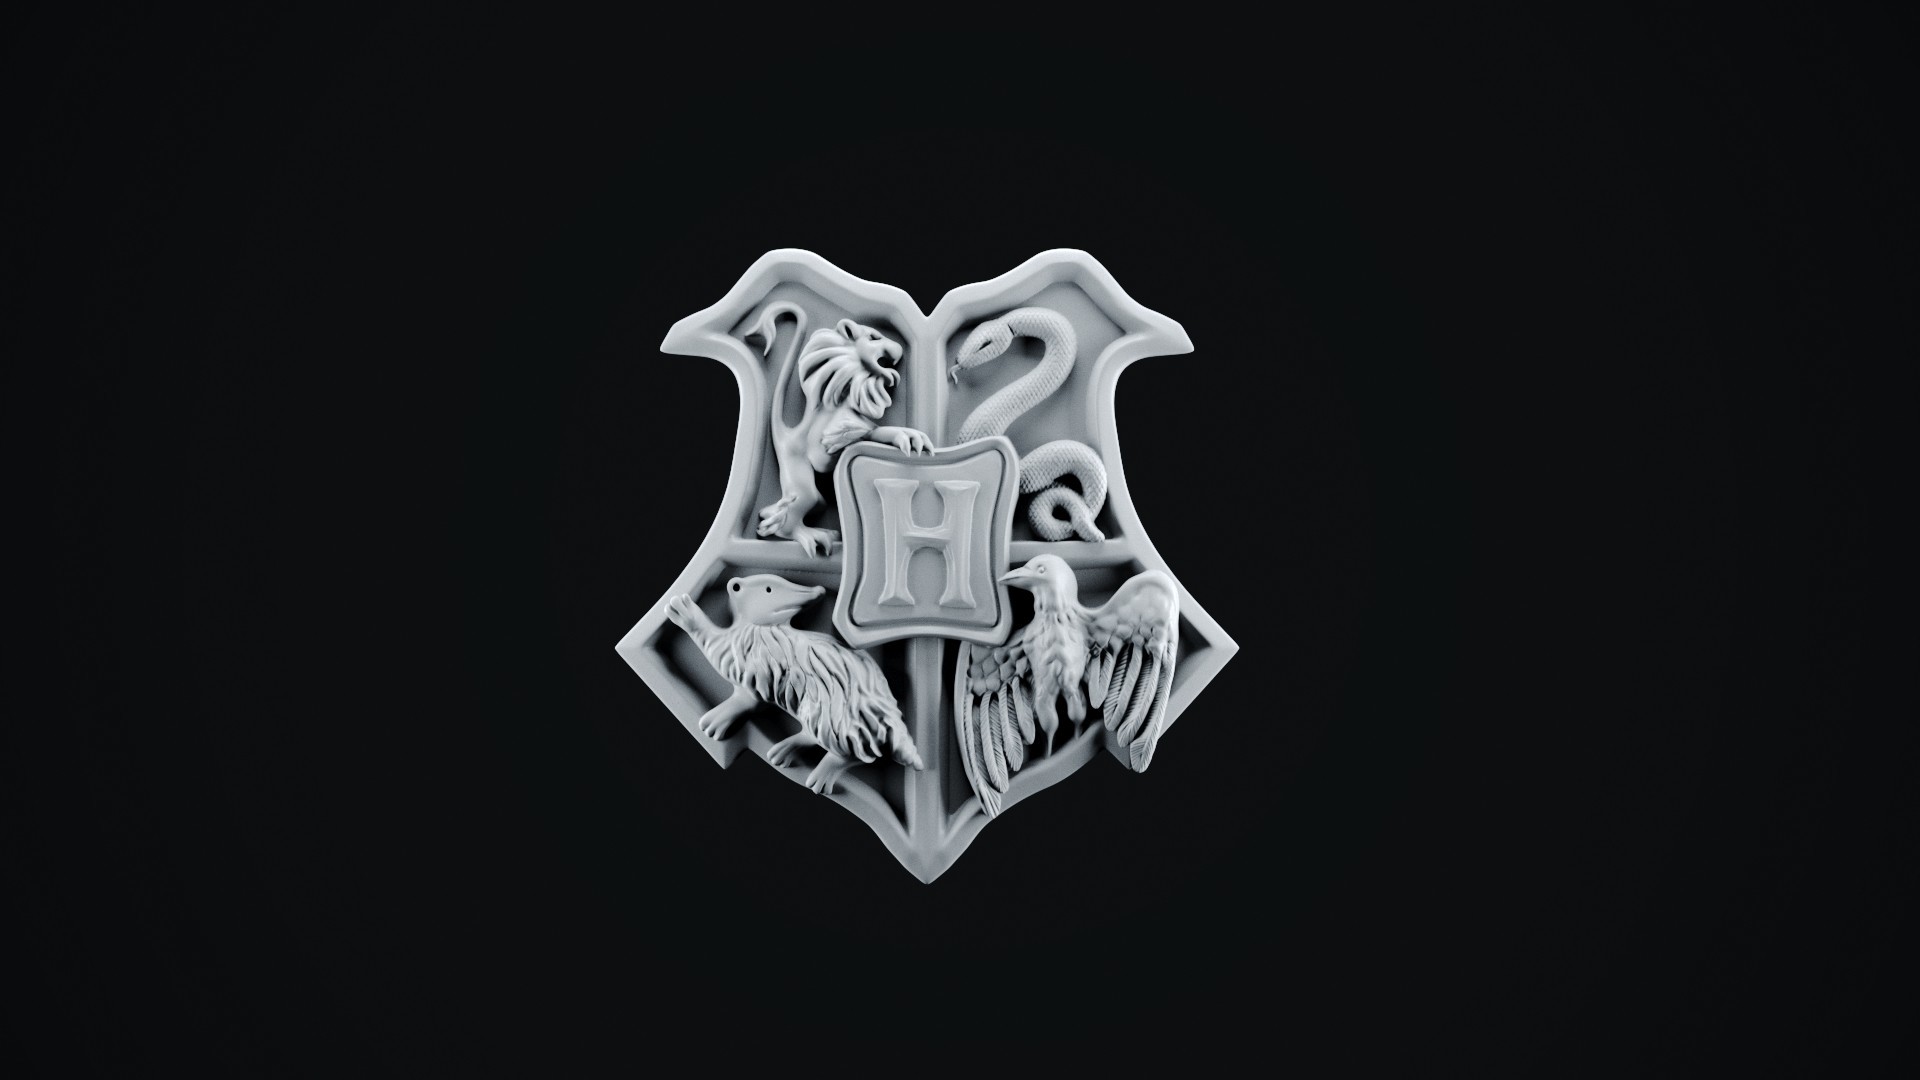 1920x1080 Hogwarts Virtual Reality